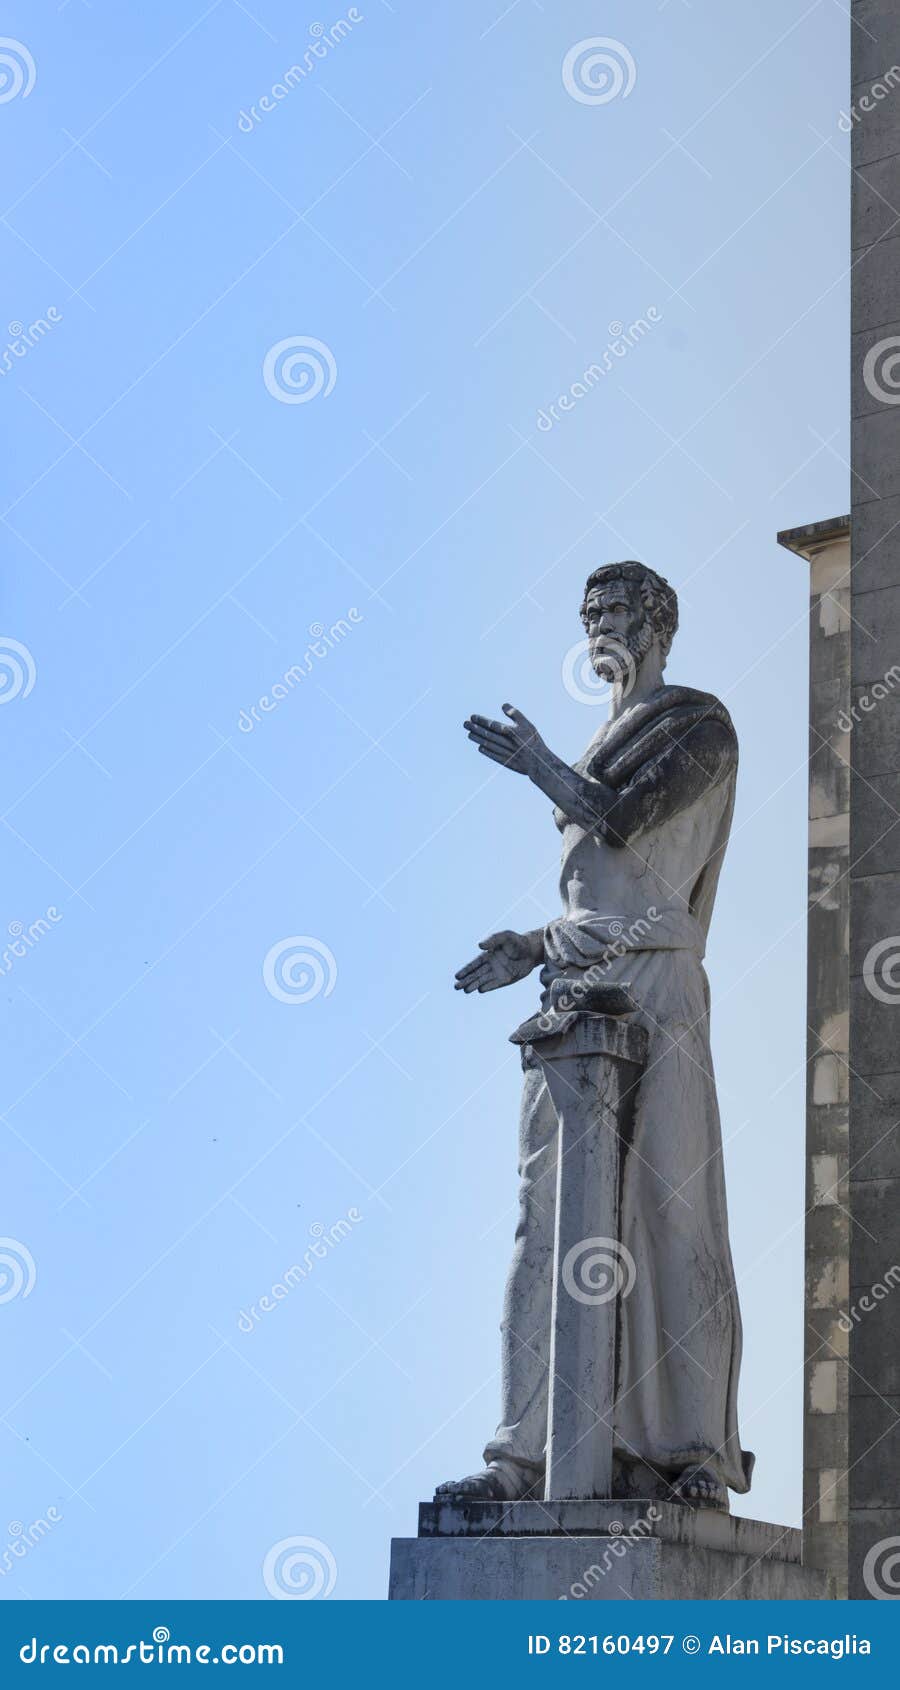 statue in coimbra university